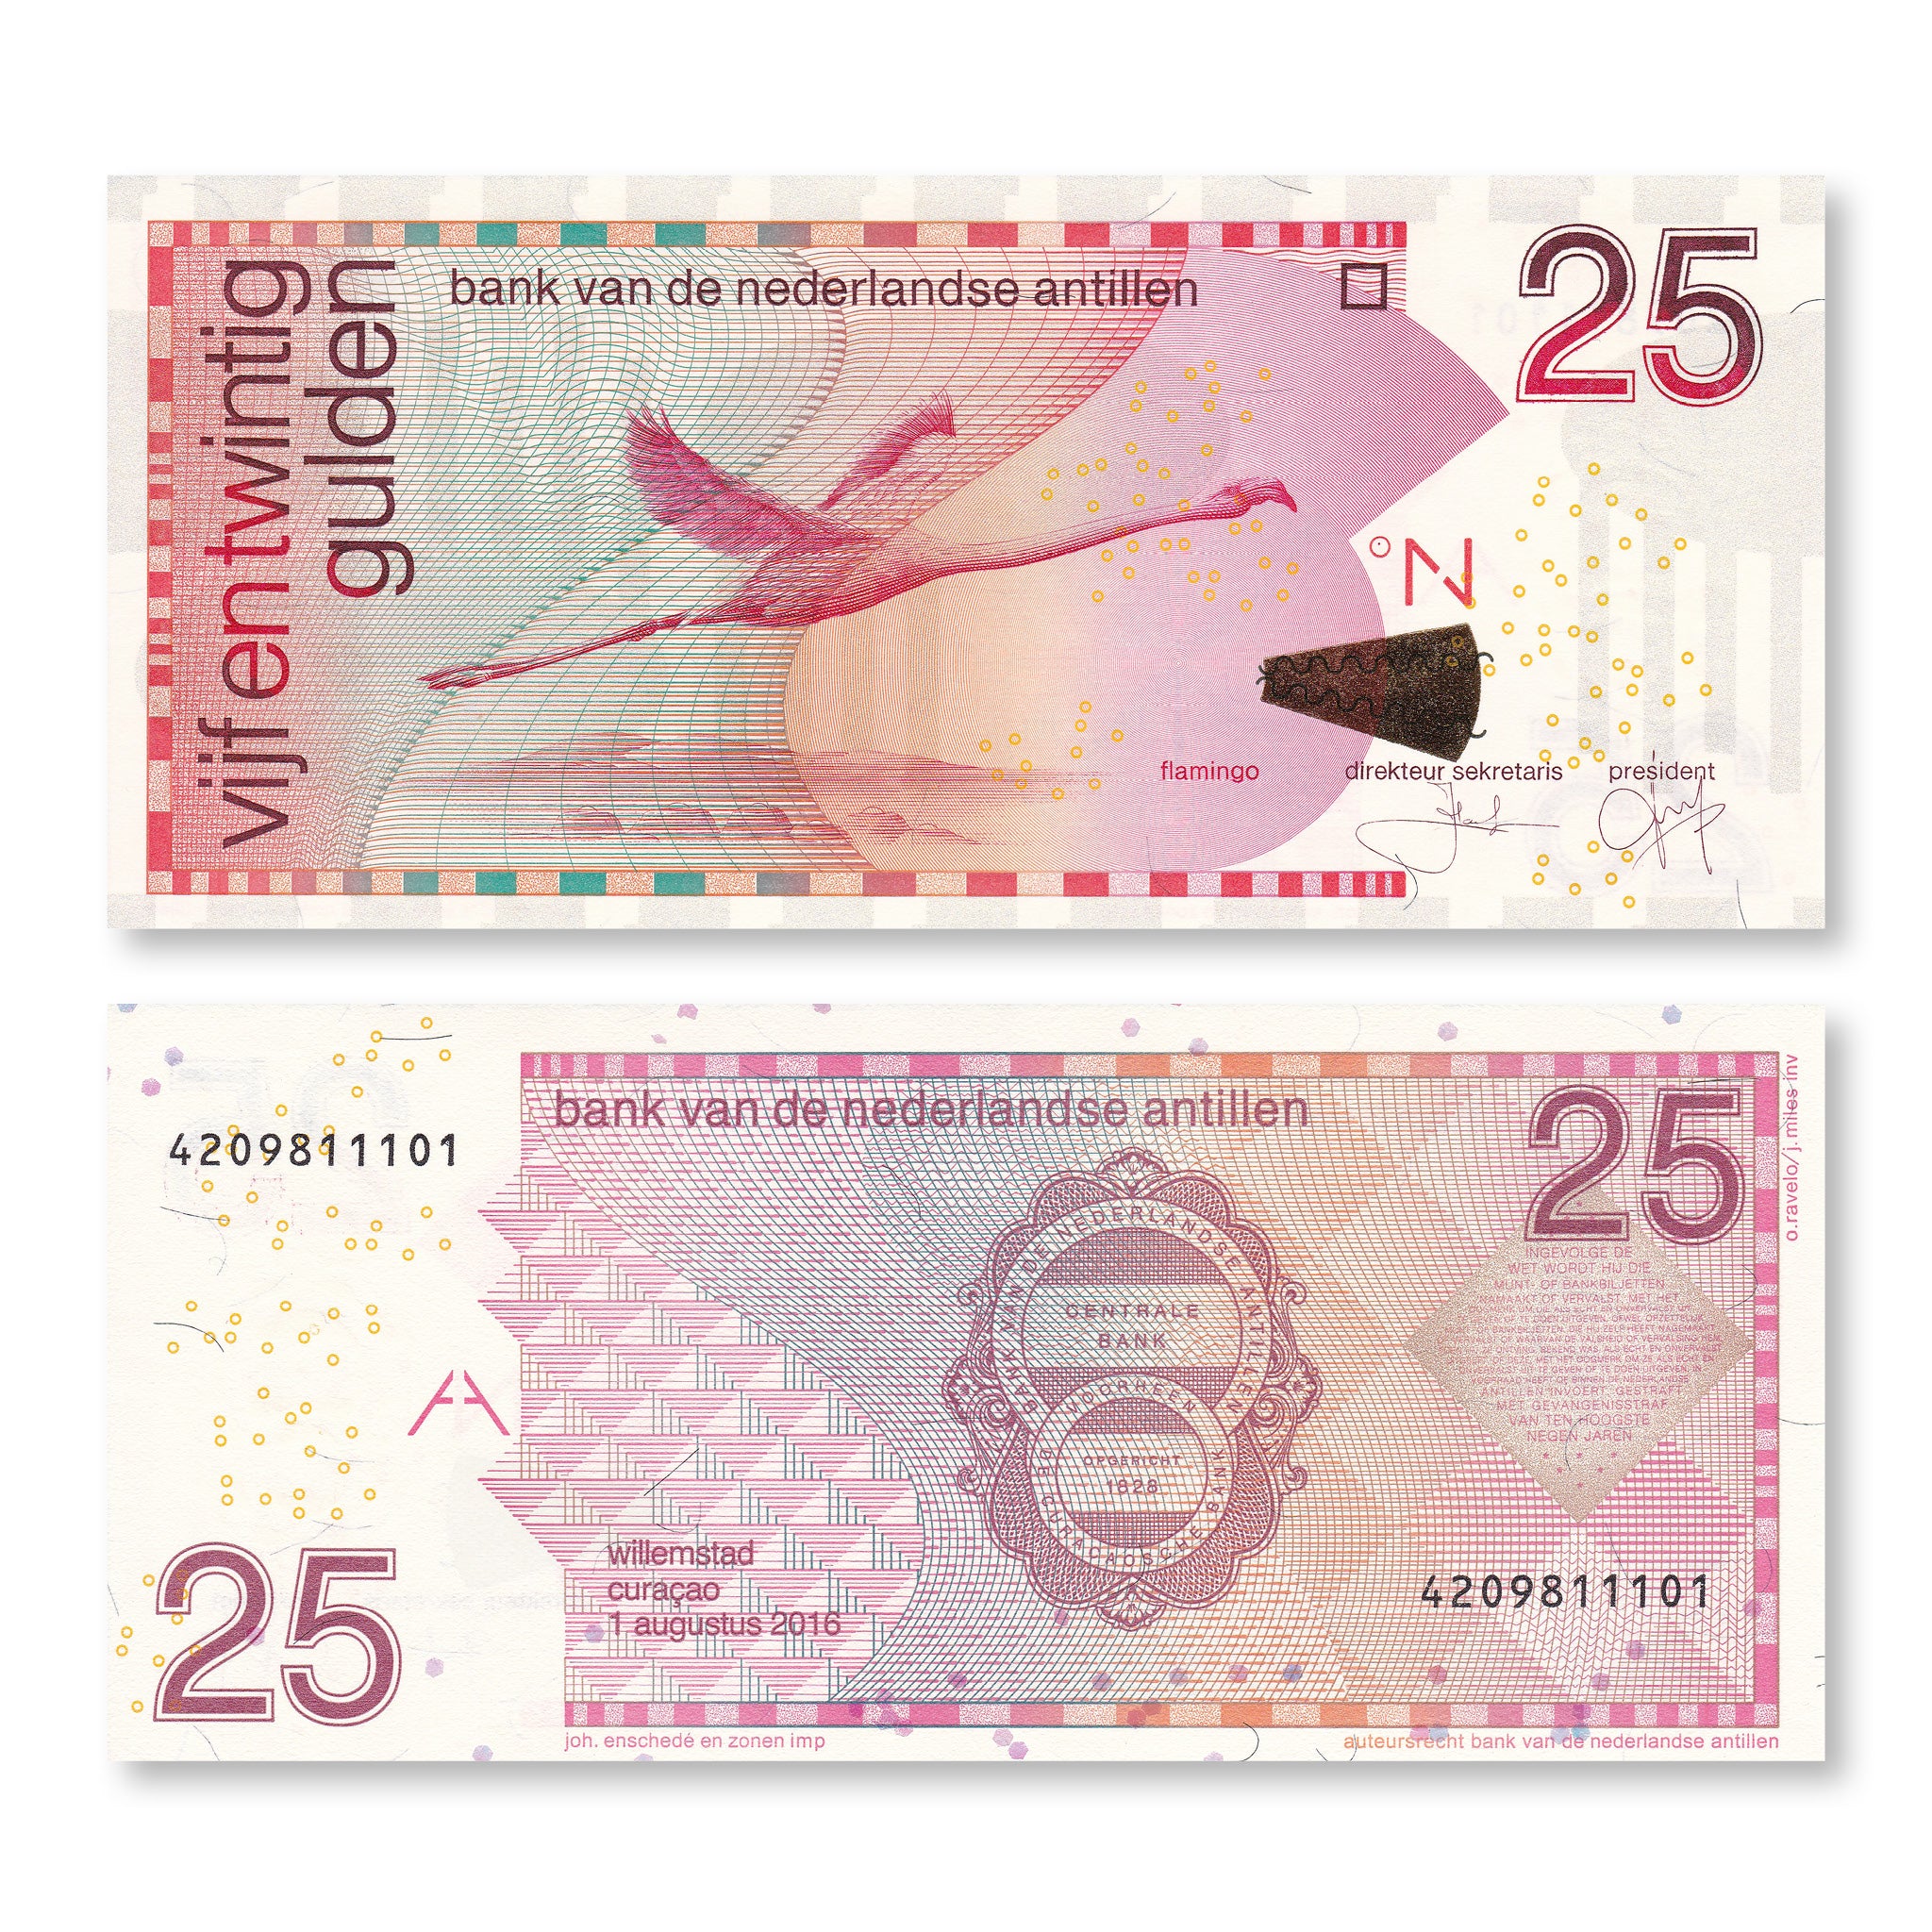 Netherlands Antilles 25 Gulden, 2016, B226i, P29i, UNC - Robert's World Money - World Banknotes